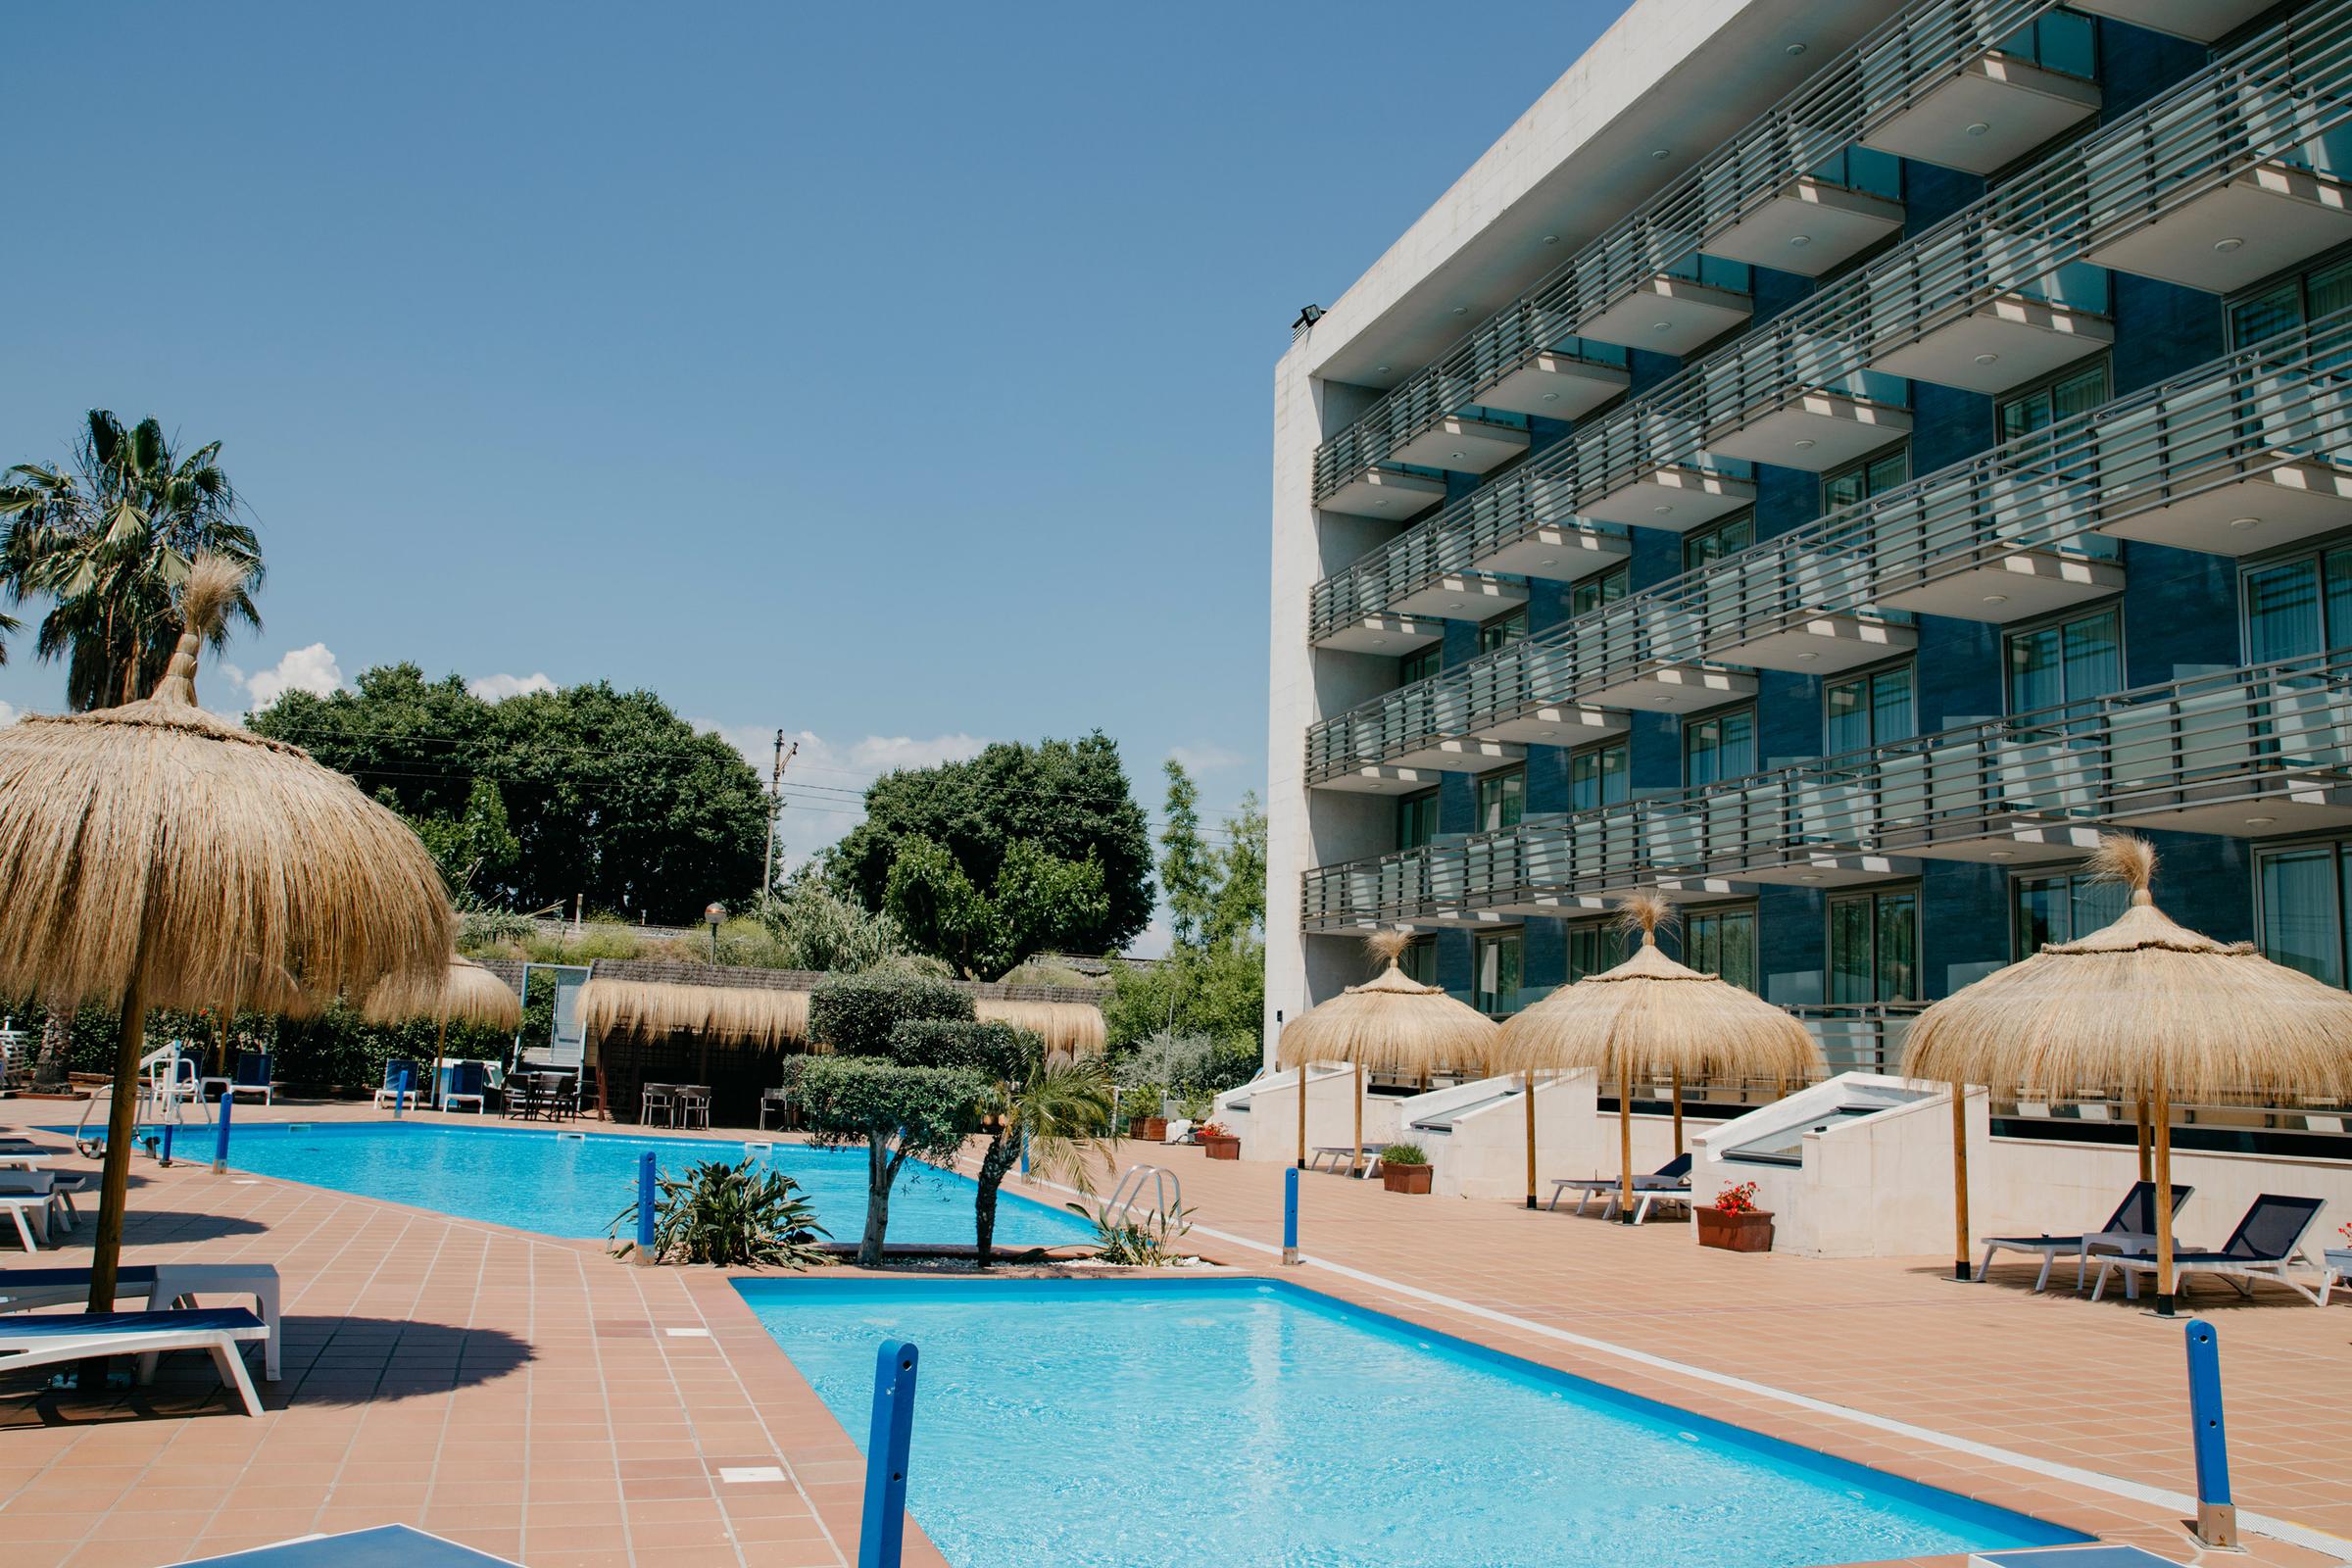 Espagne - Costa Dorada - Cambrils - Hotel Sol Port Cambrils 4*